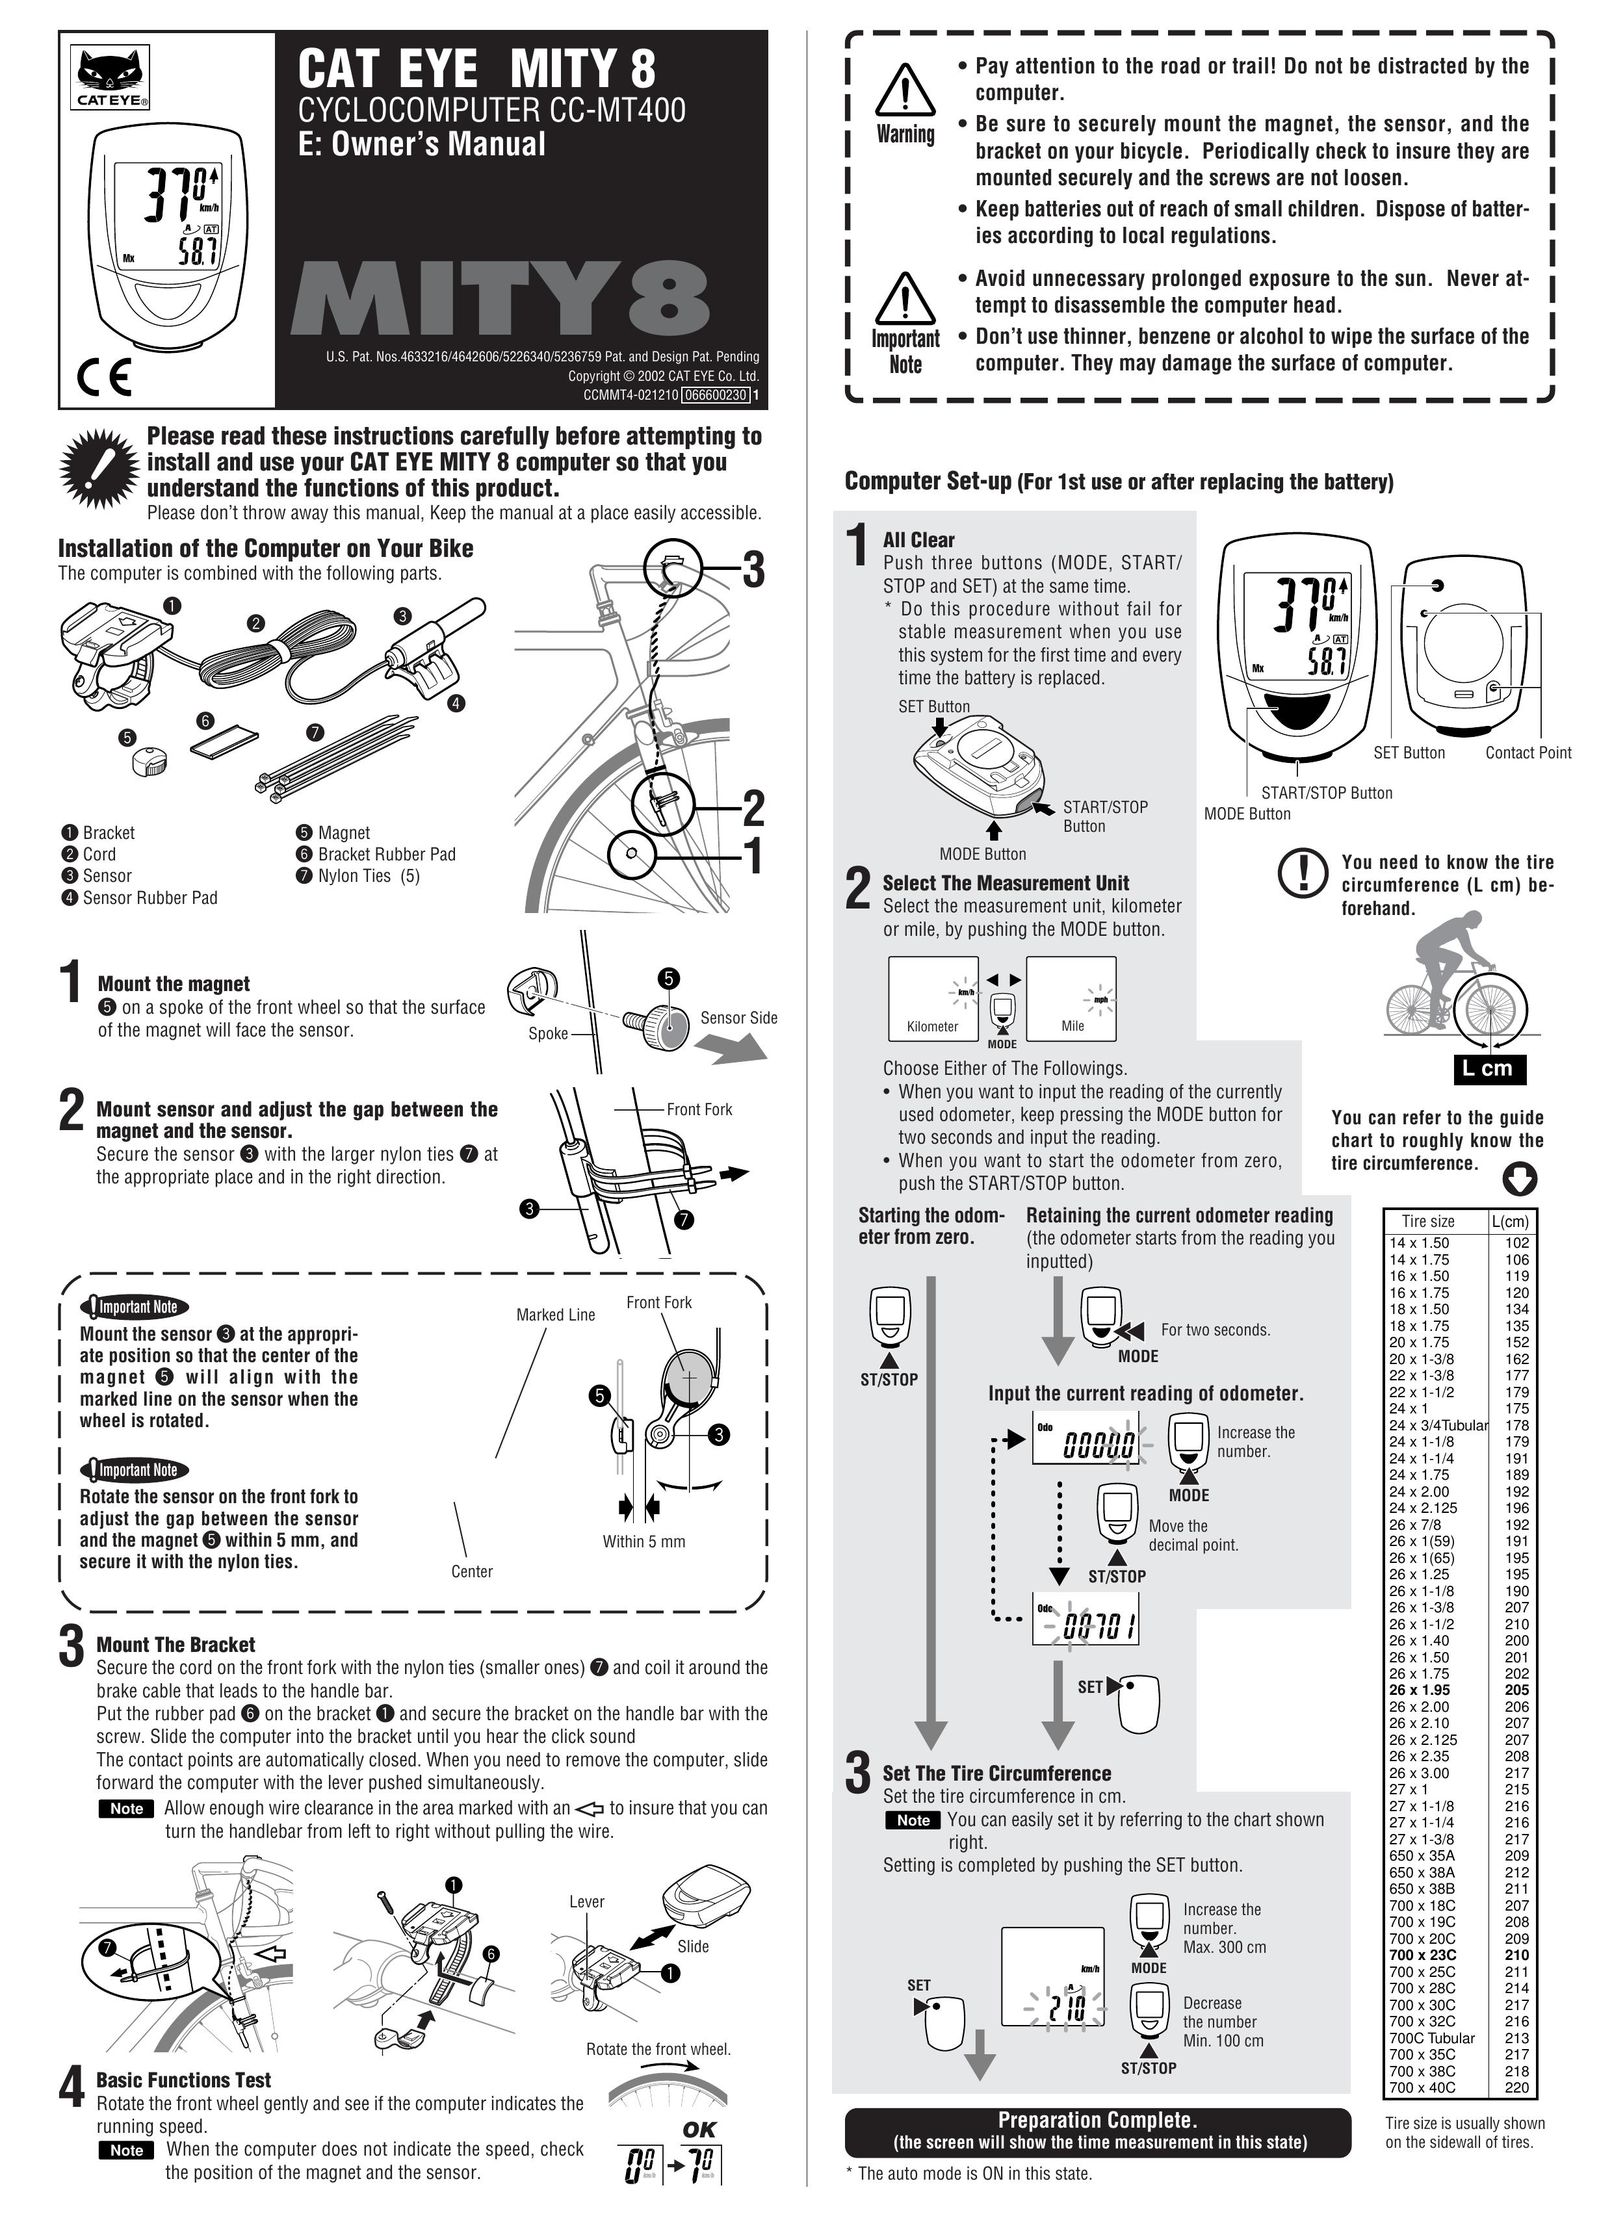 Cateye CC-MT400 Cyclometer User Manual